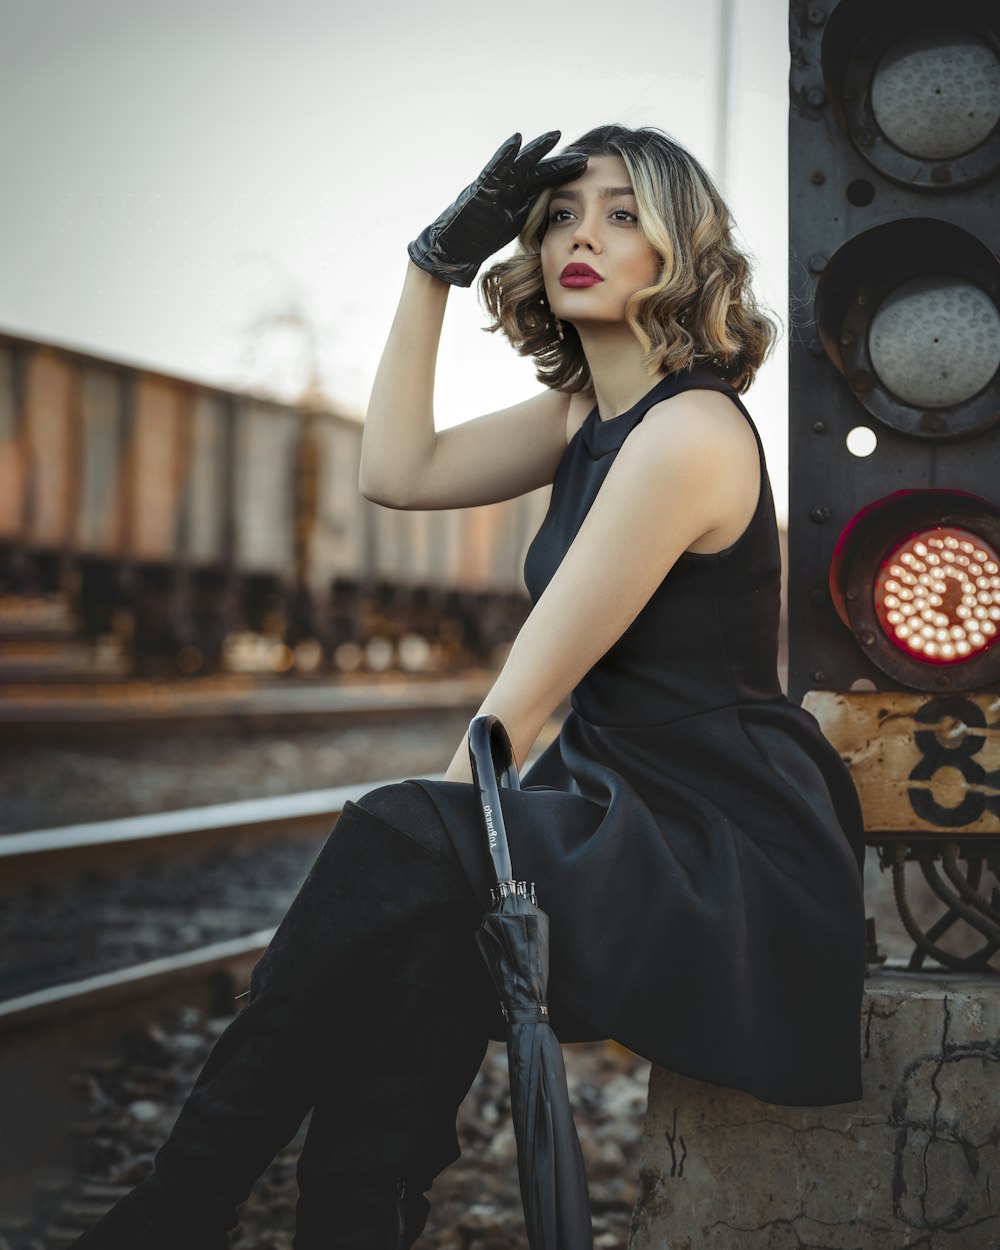 a woman in a black dress sitting on a train track